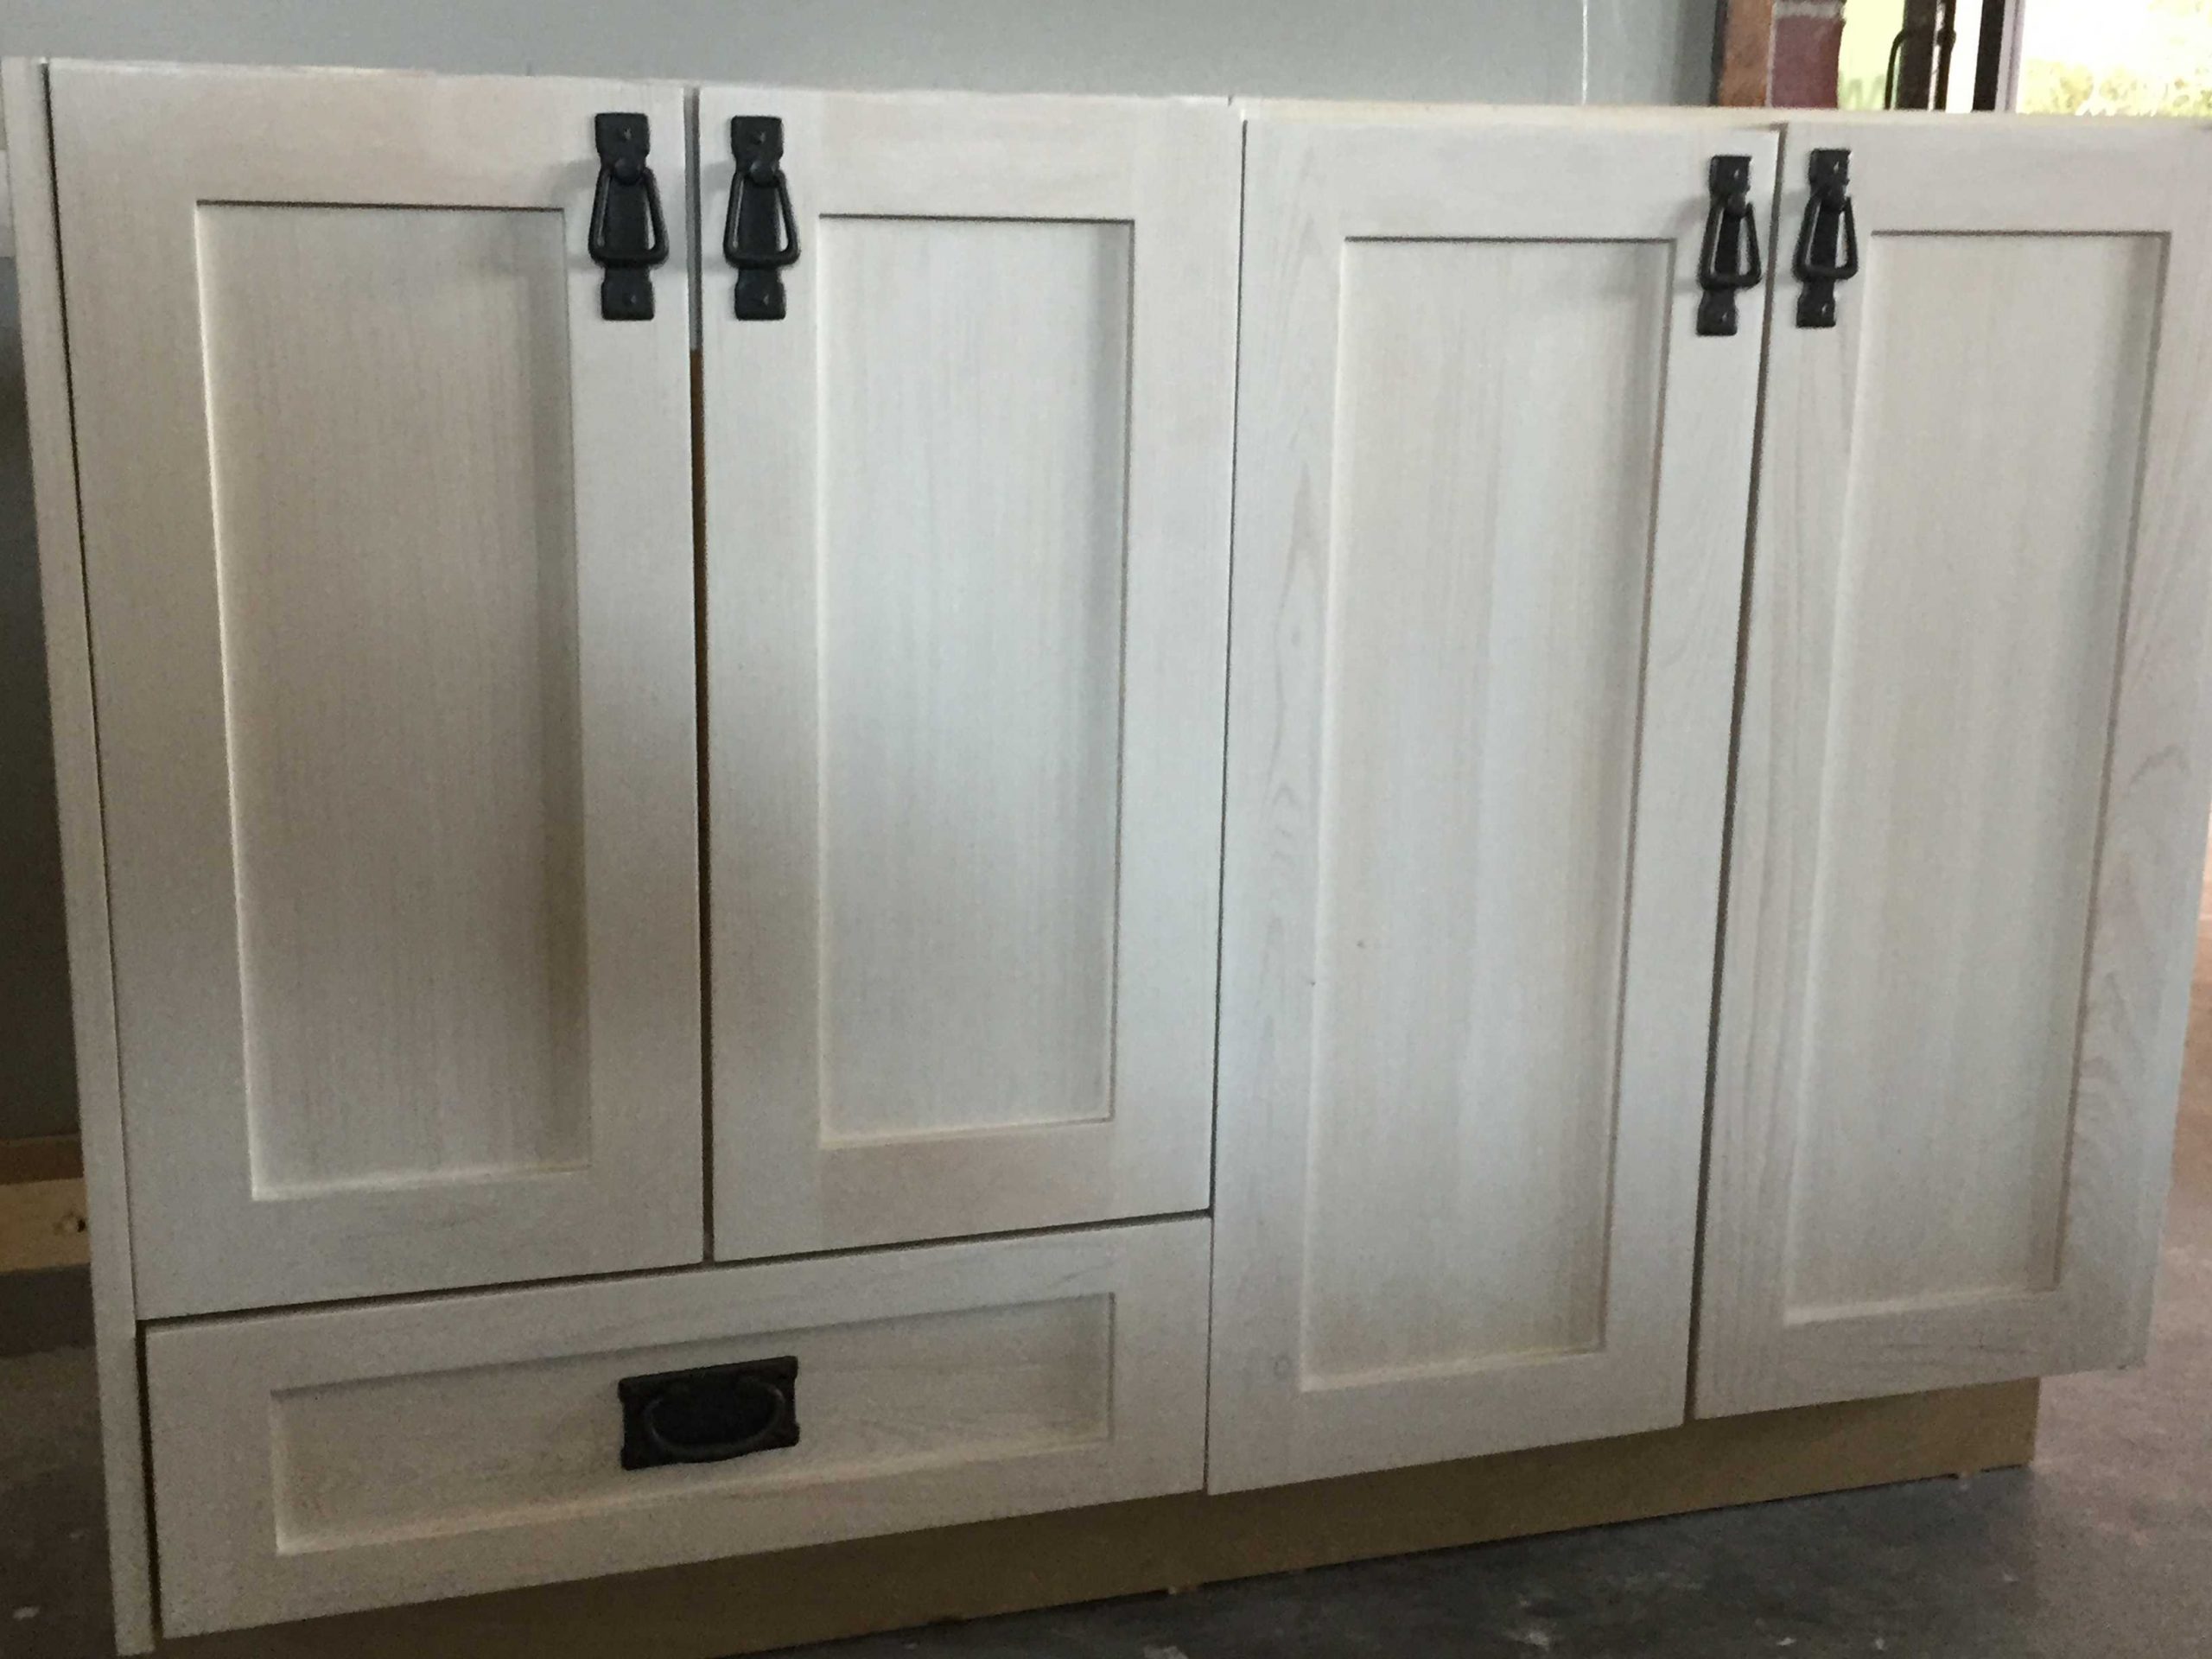 White Cabinets Custom Cabinetry Alpha Closets Company Inc, 6084 Gulf Breeze Pkwy, Gulf Breeze, Fl 32563 (850) 934 9130